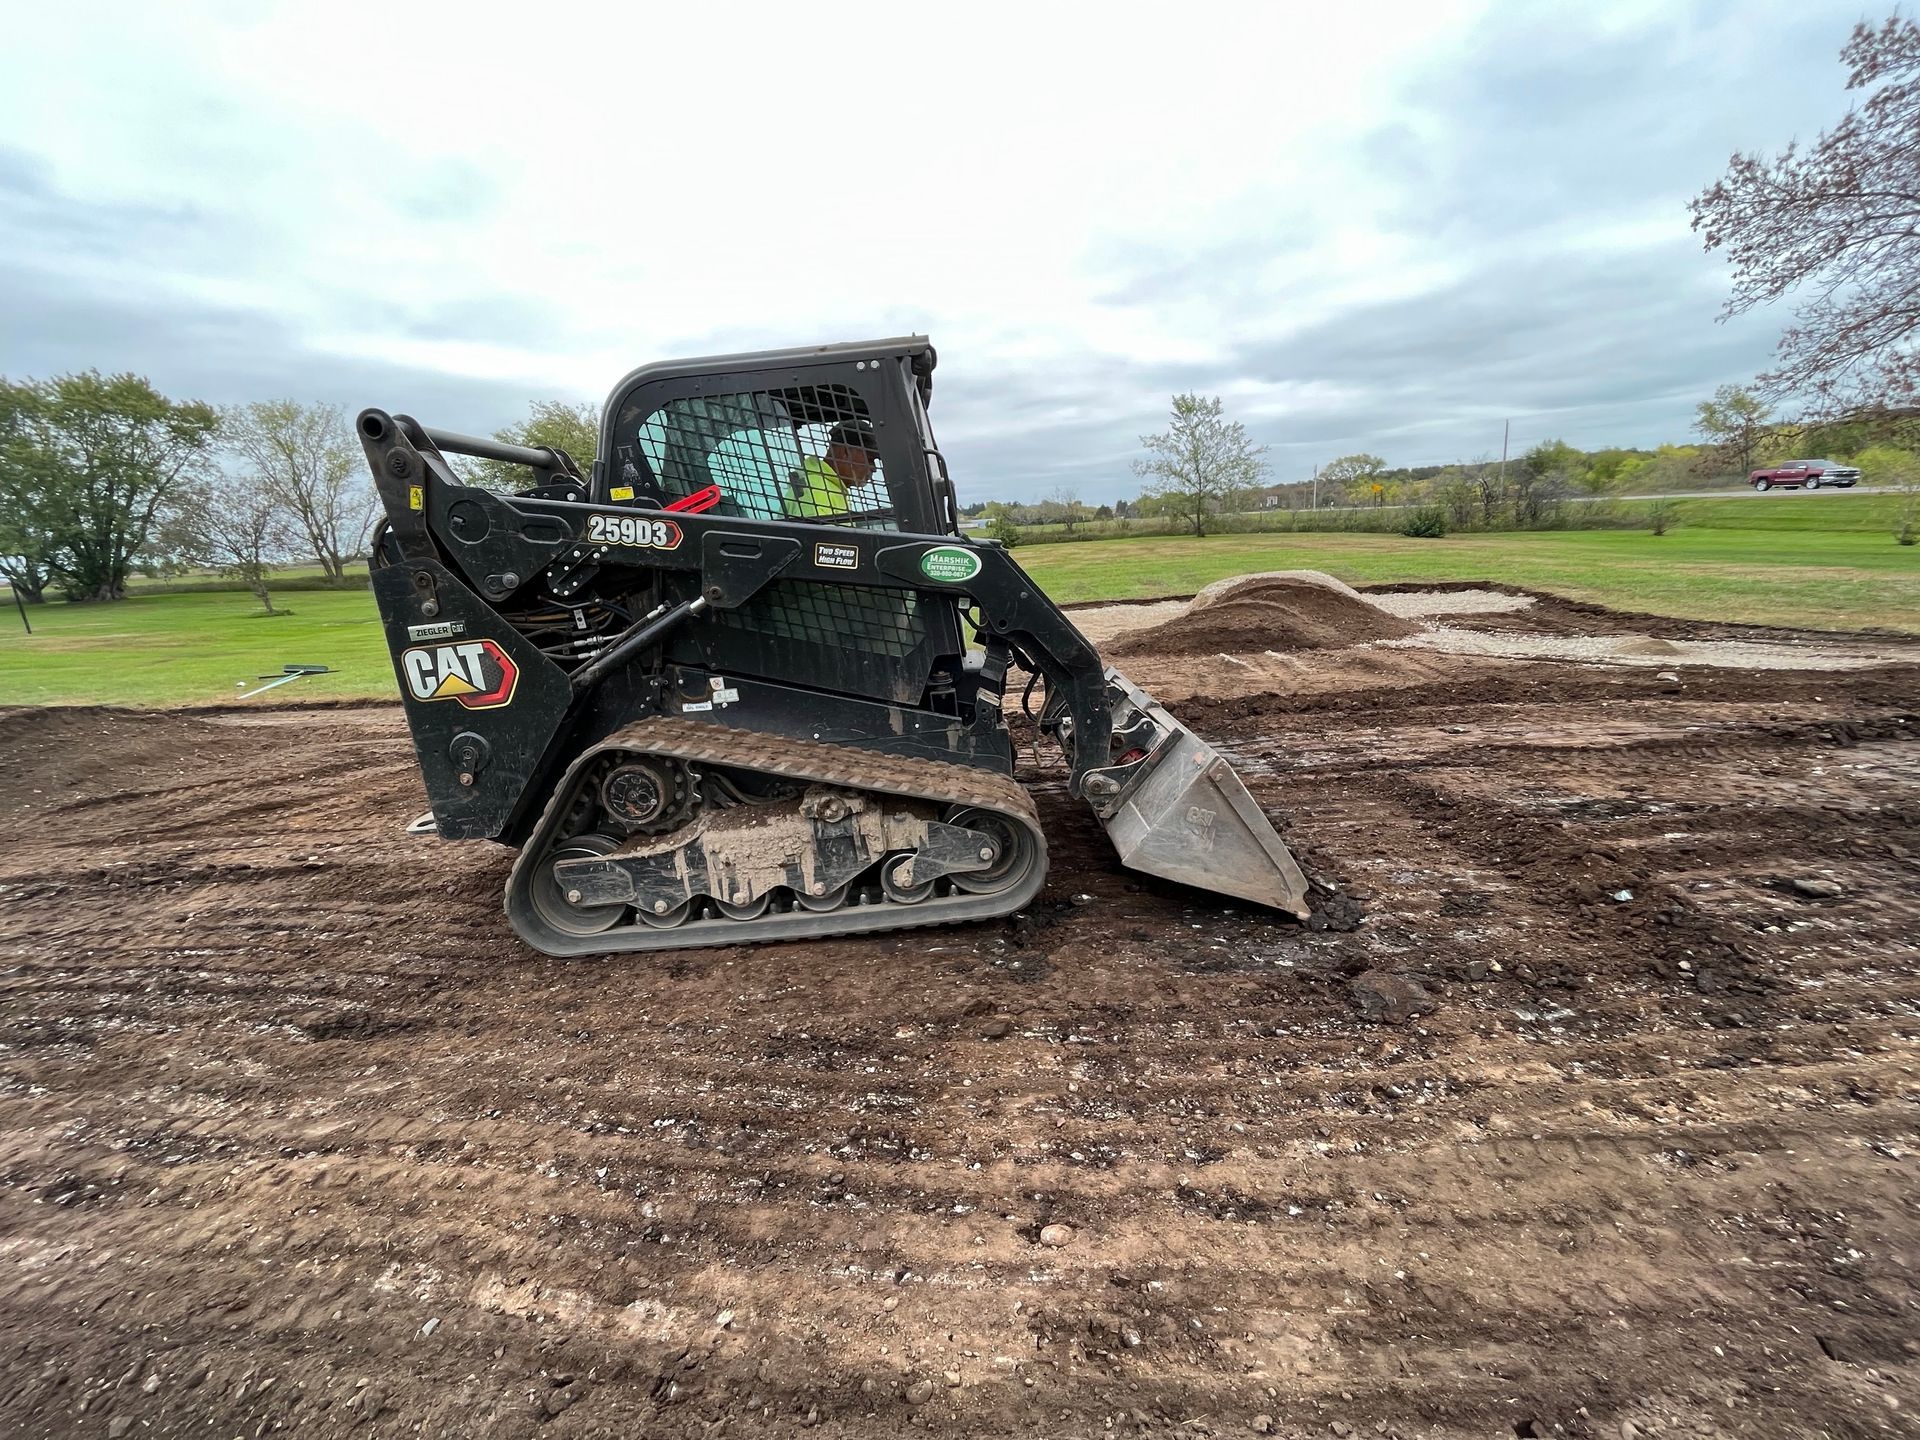 a black bulldozer on dirt